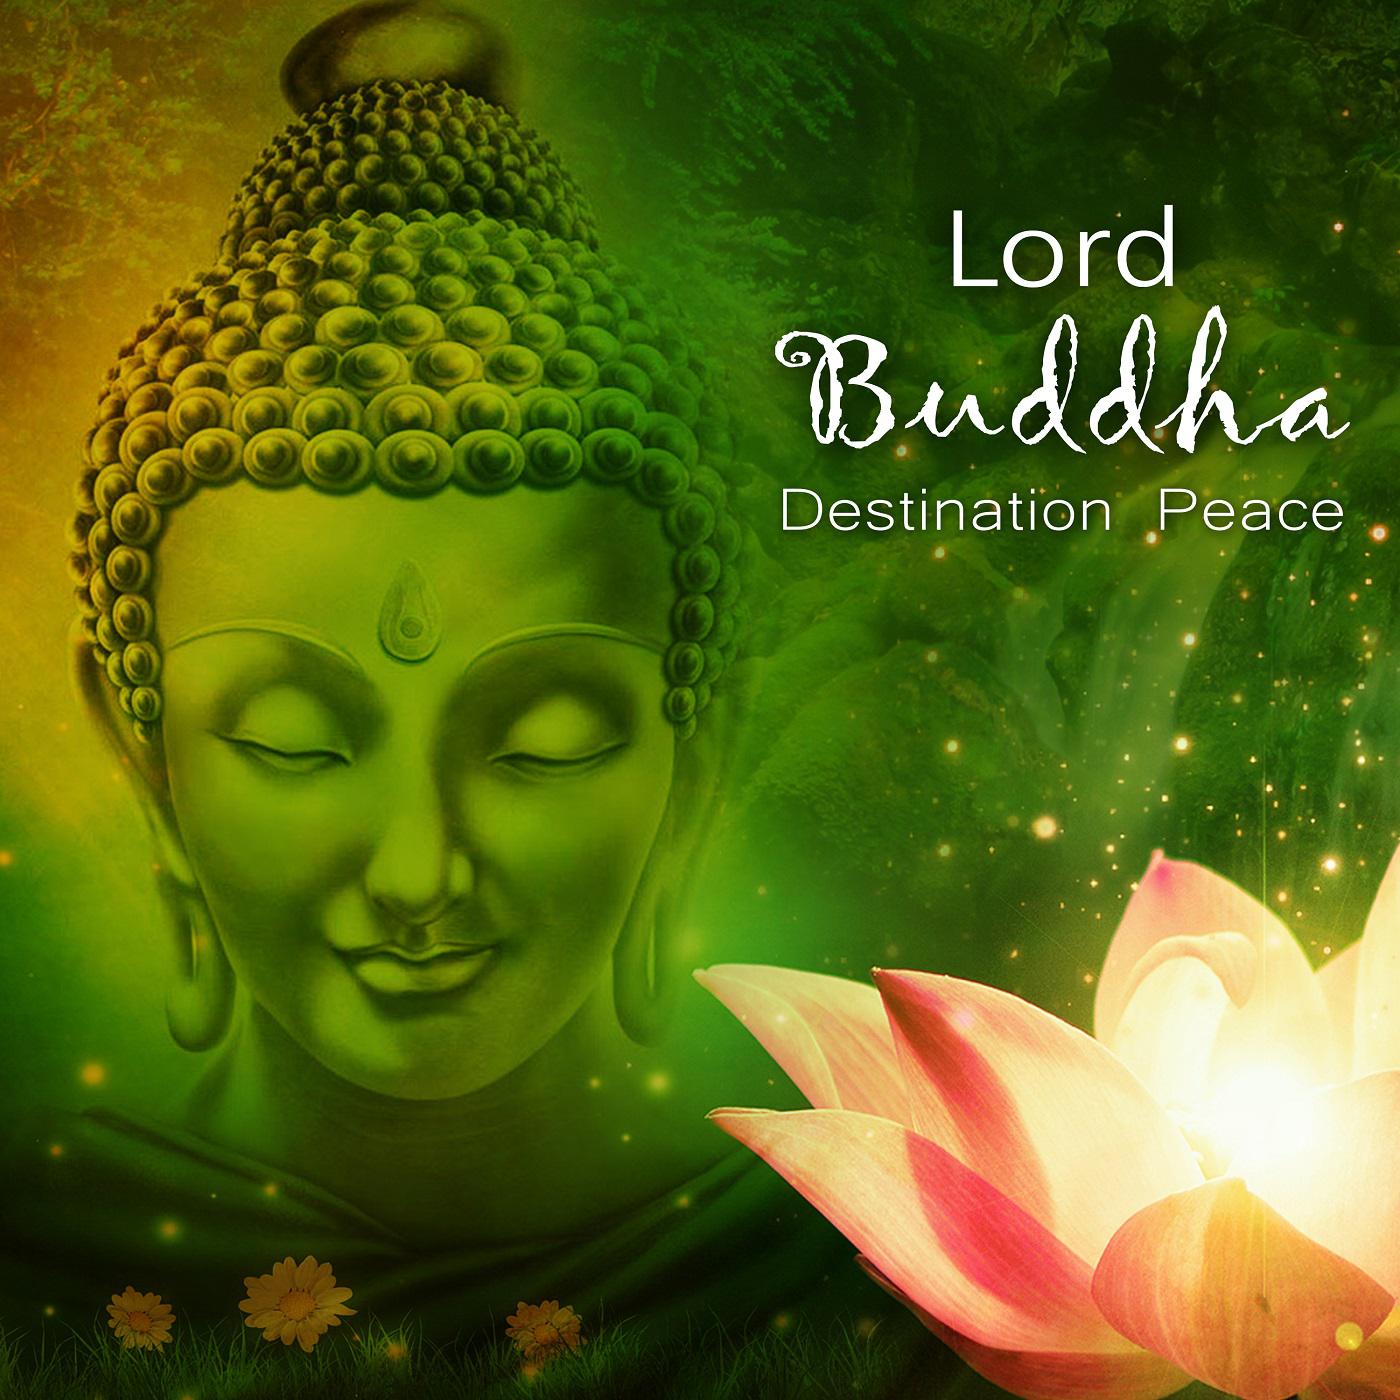 Lord Buddha - Destination Peace